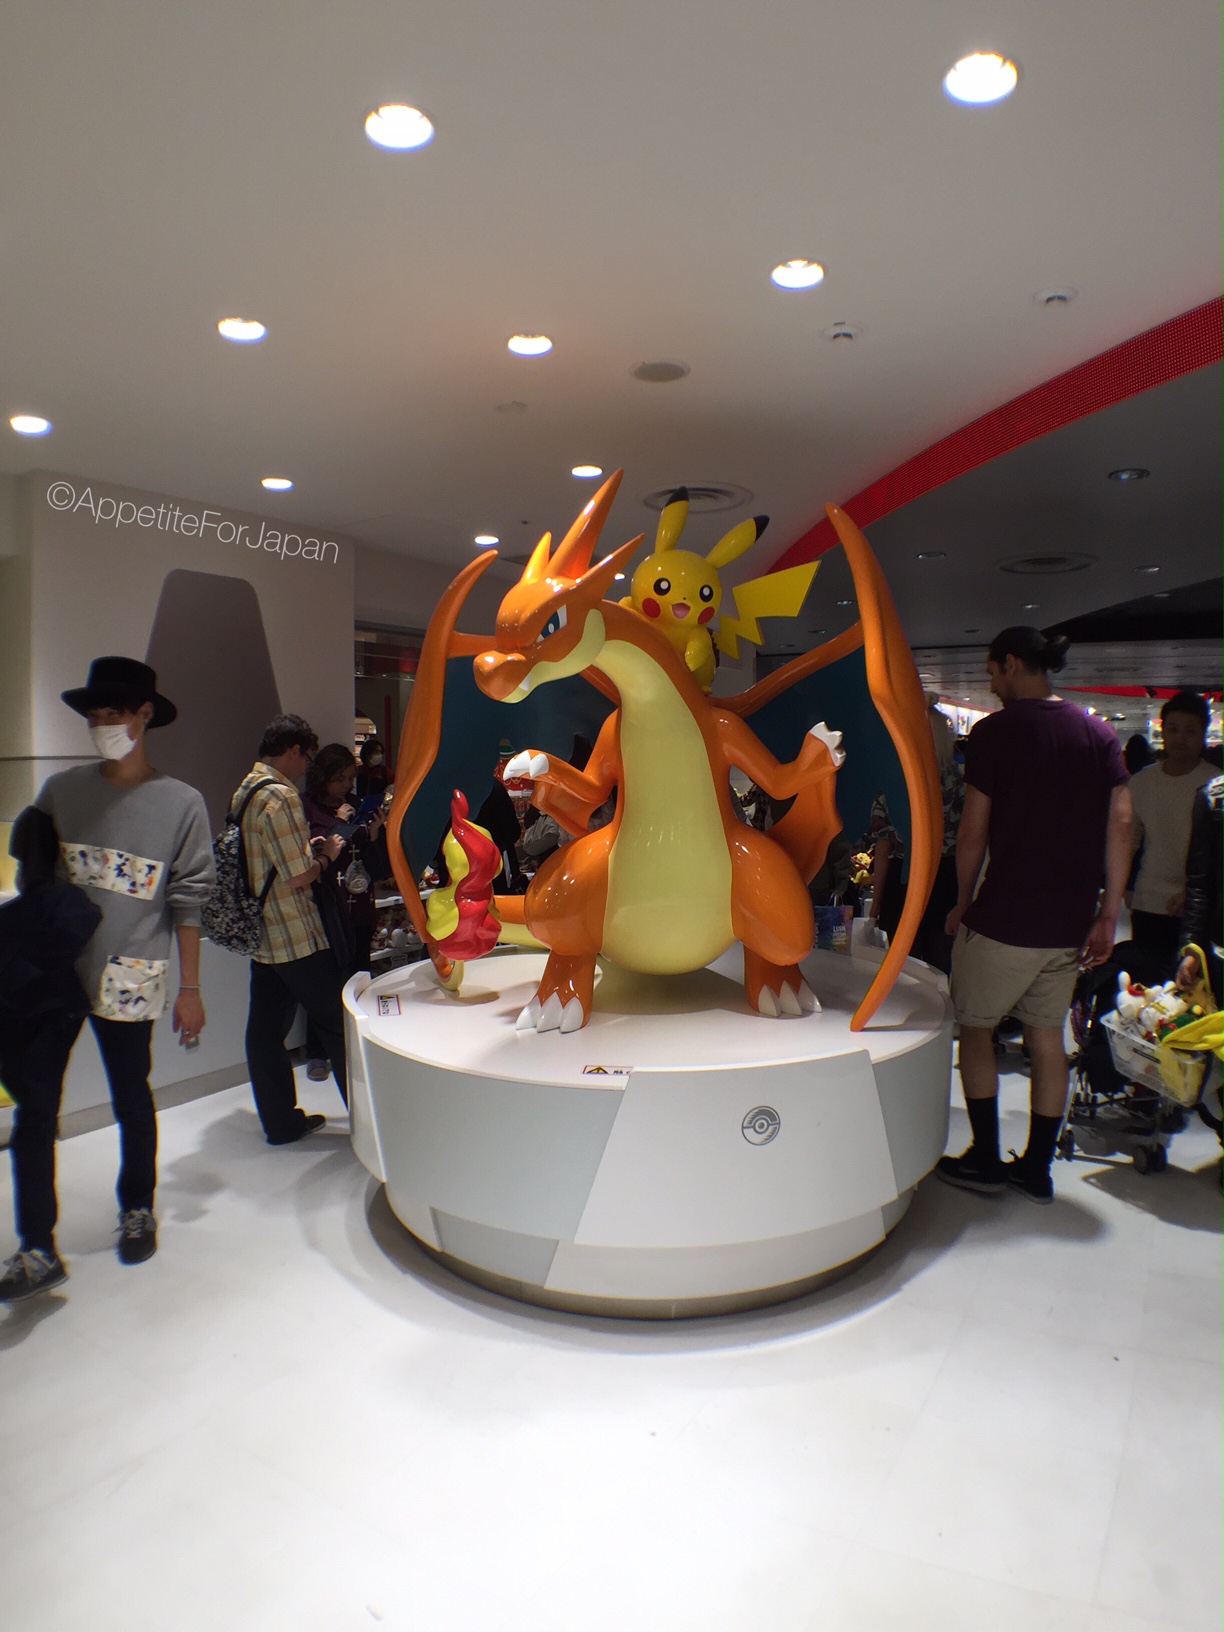 Mega Pokemon Center Tokyo, I Choose You!